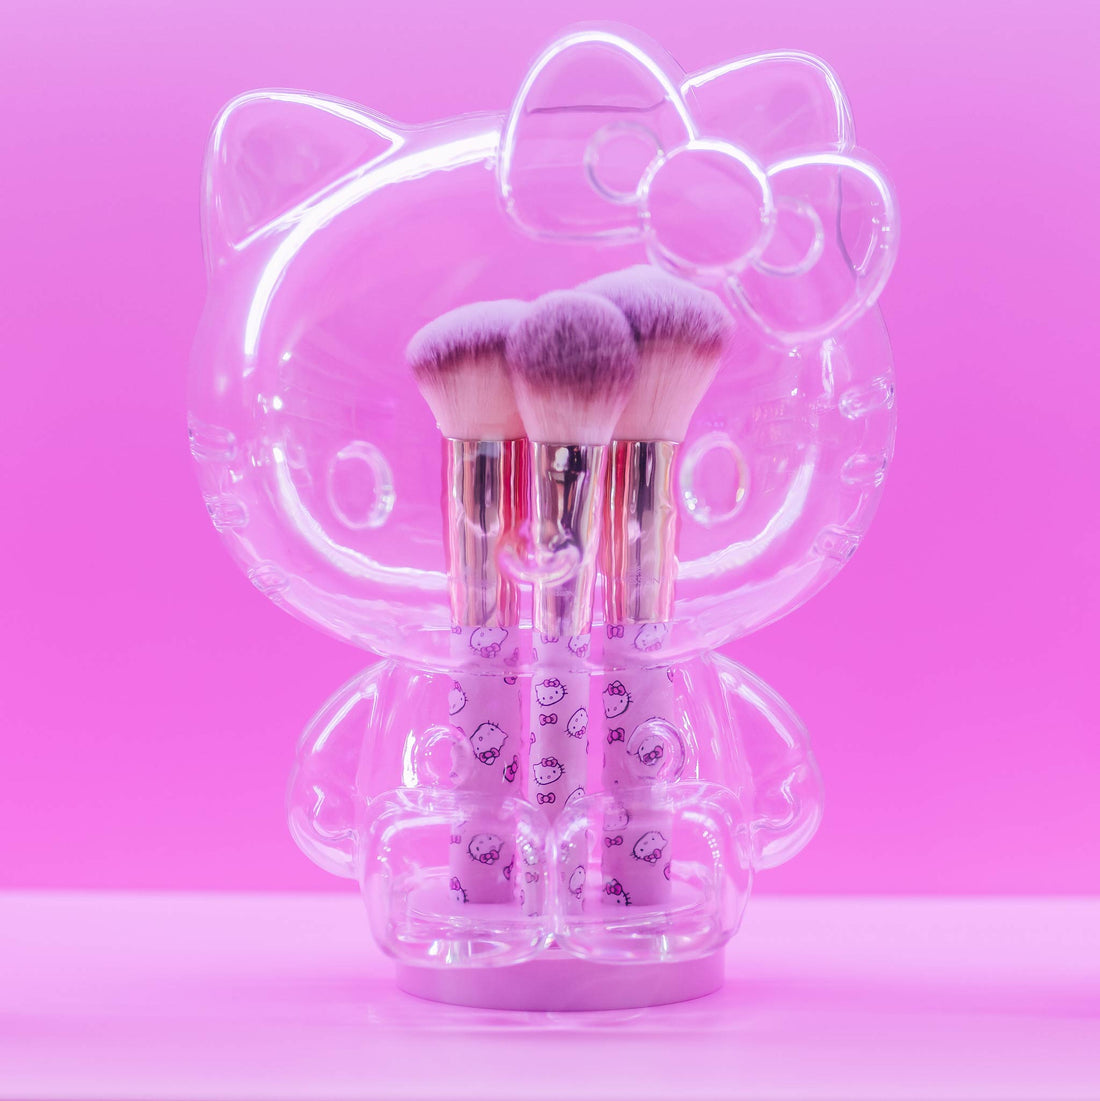 Hello Kitty® "Supercute Signature" 6-PC Brush Gift Set